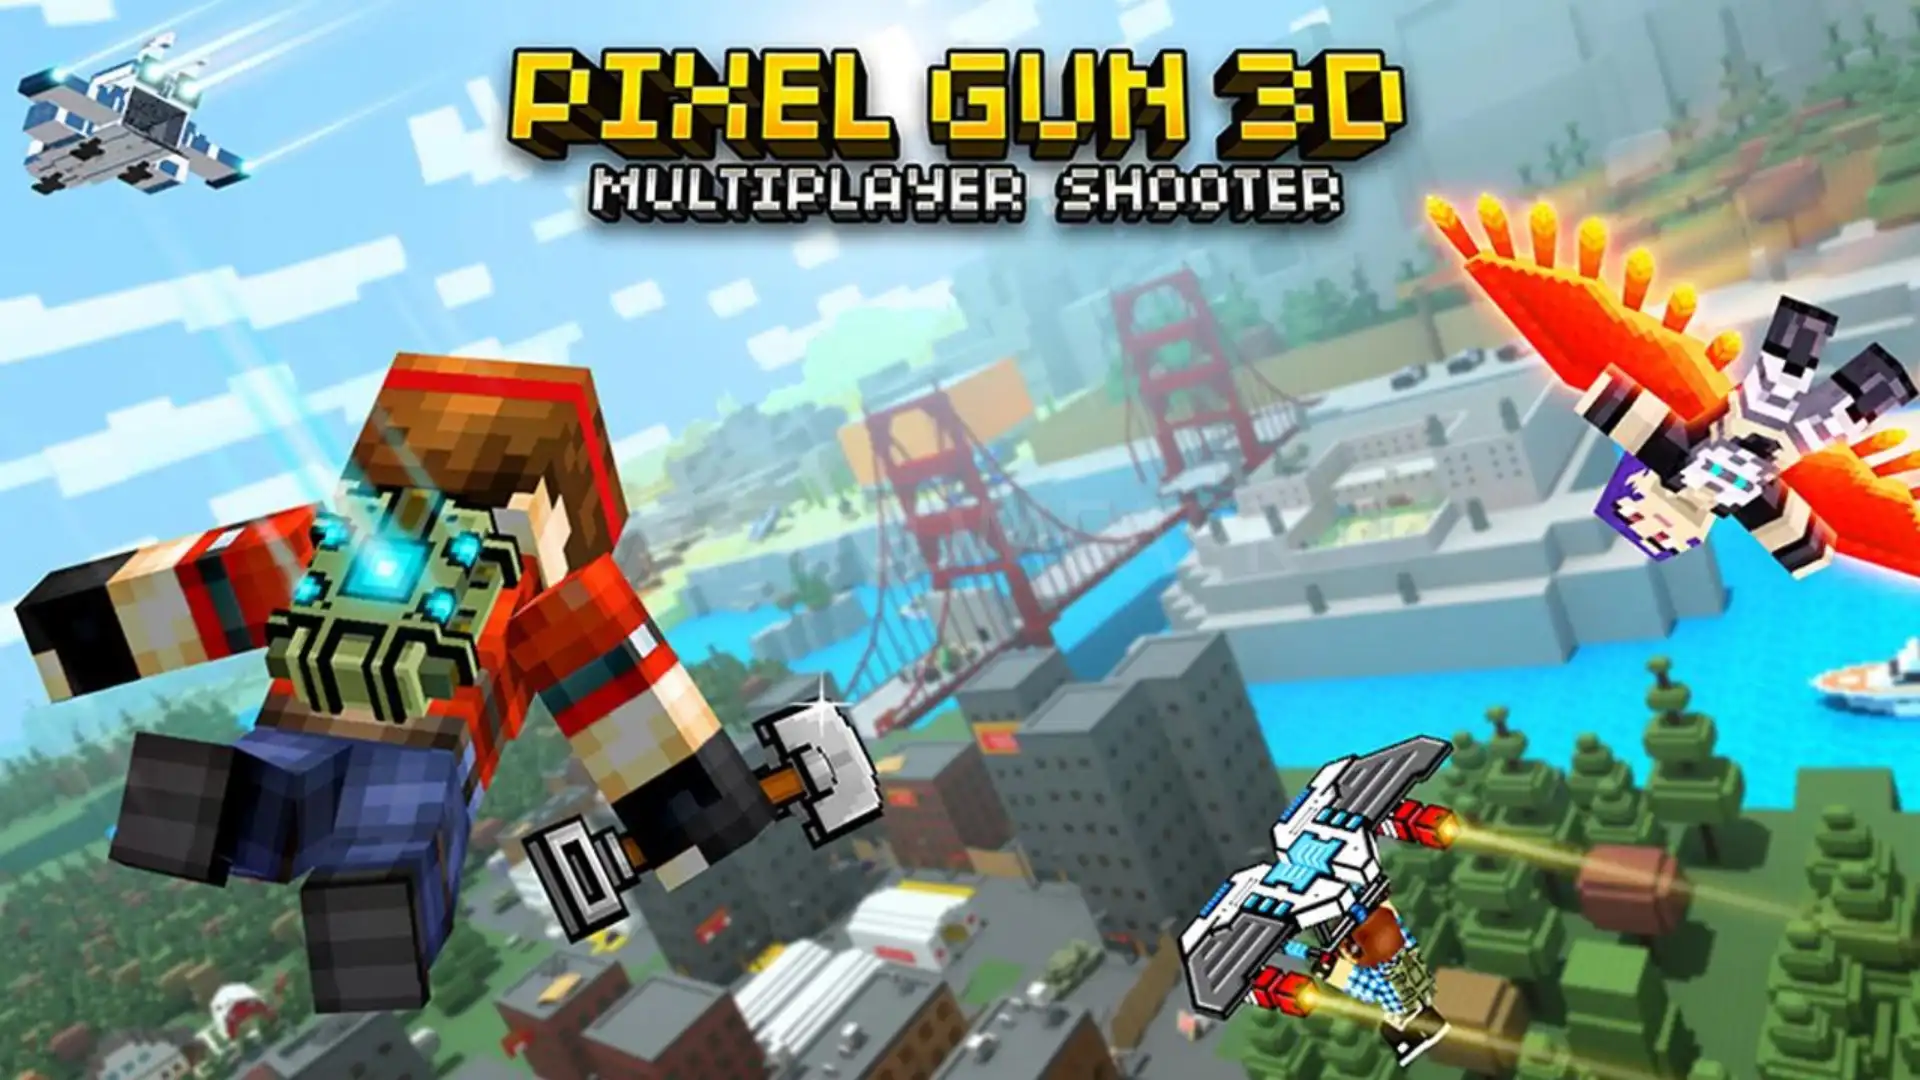 Pixel Gun 3D MOD APK (Unlimited Money/Ammo) Download